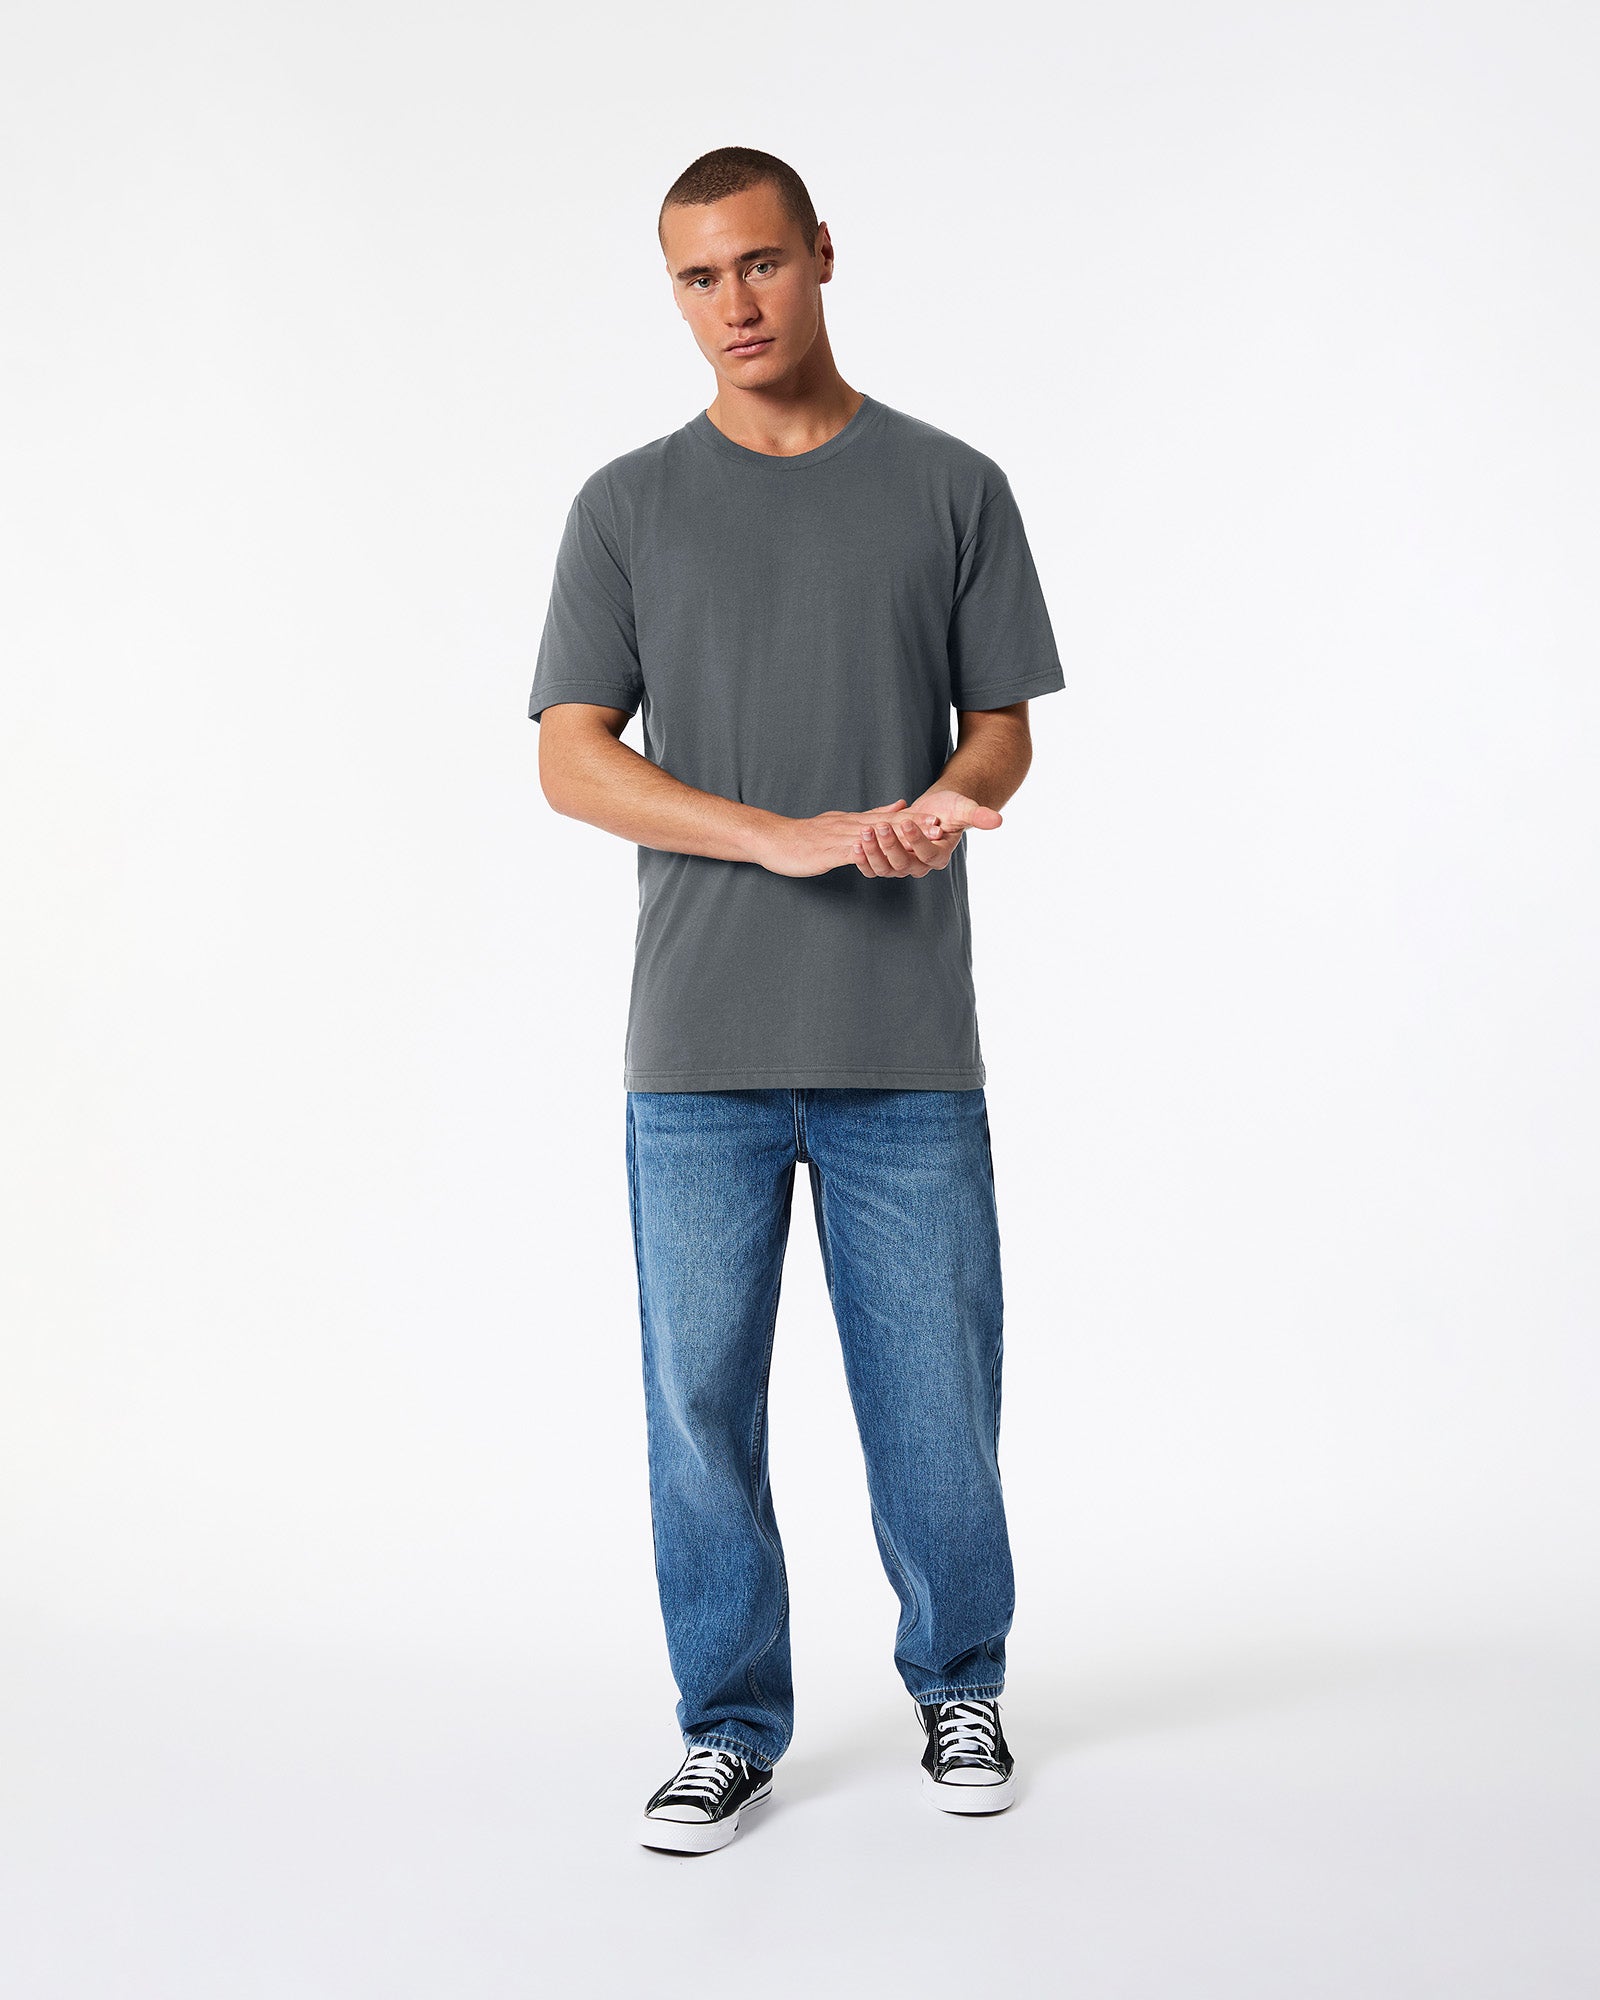 Fine Jersey Unisex Short Sleeve T-Shirt - Asphalt